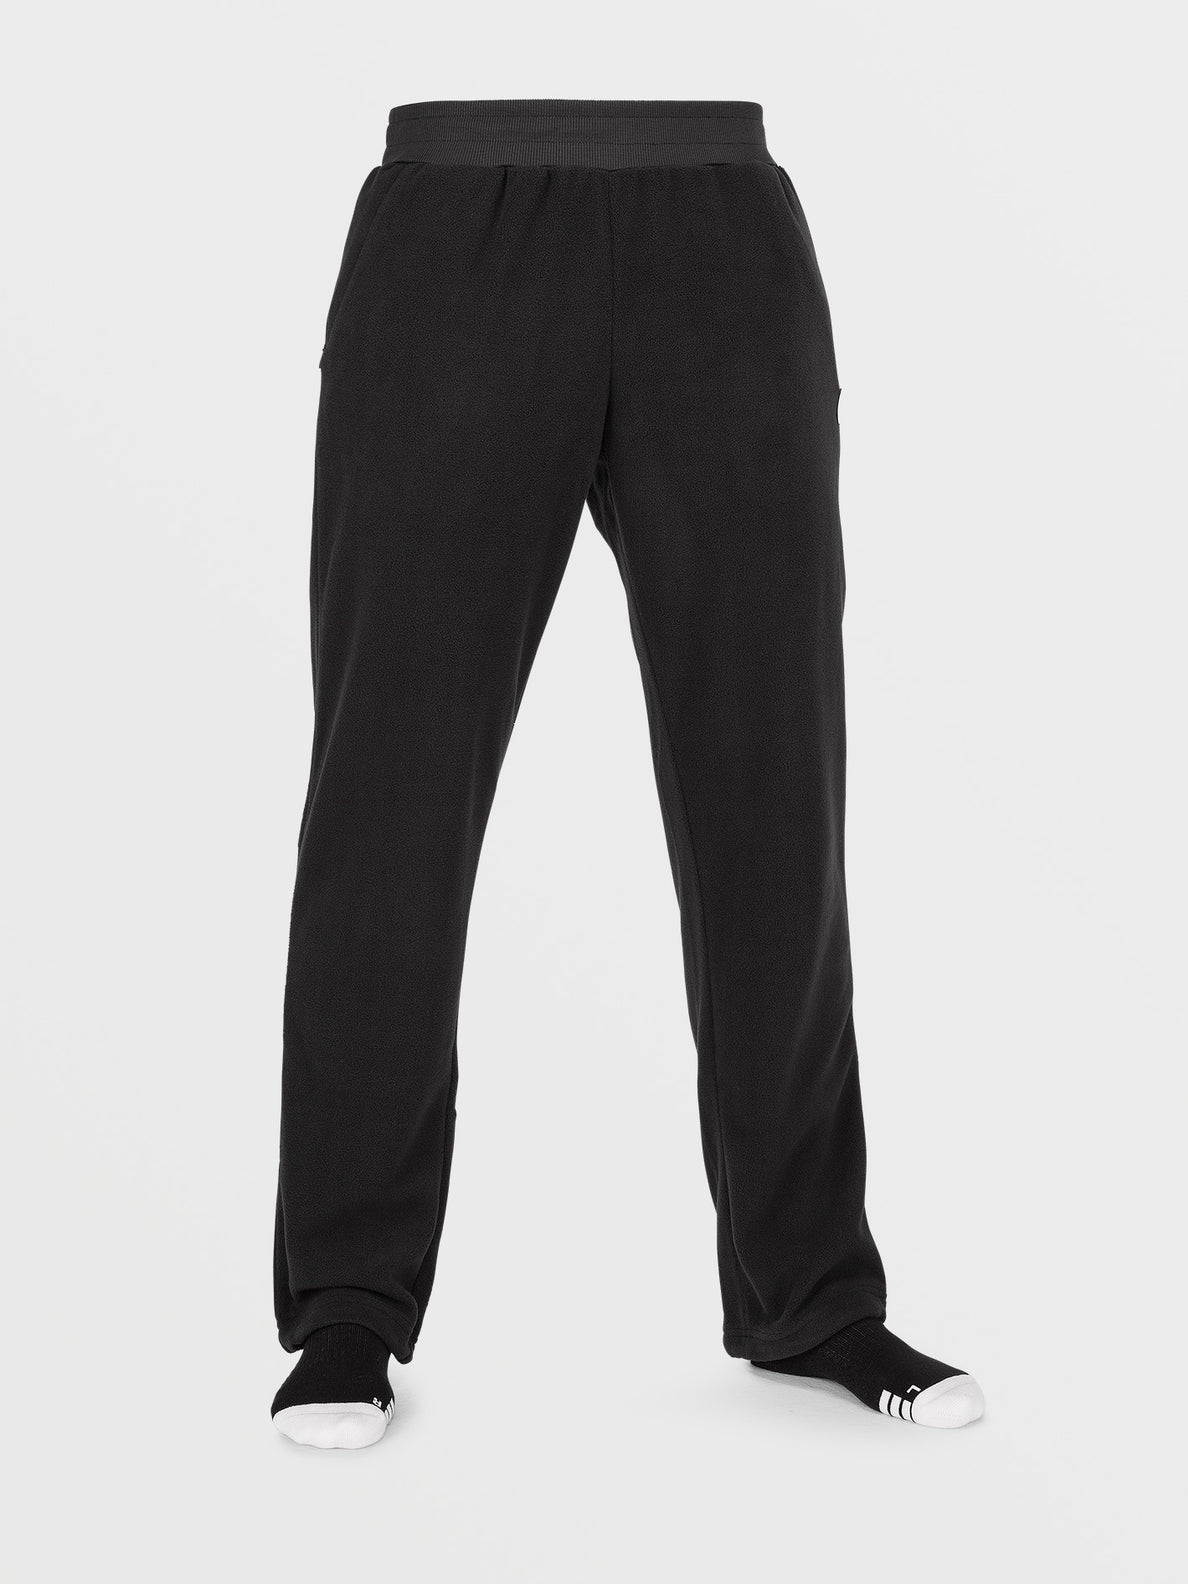 Lands' End School Uniform Women's Sweatpants - XX Small - Black